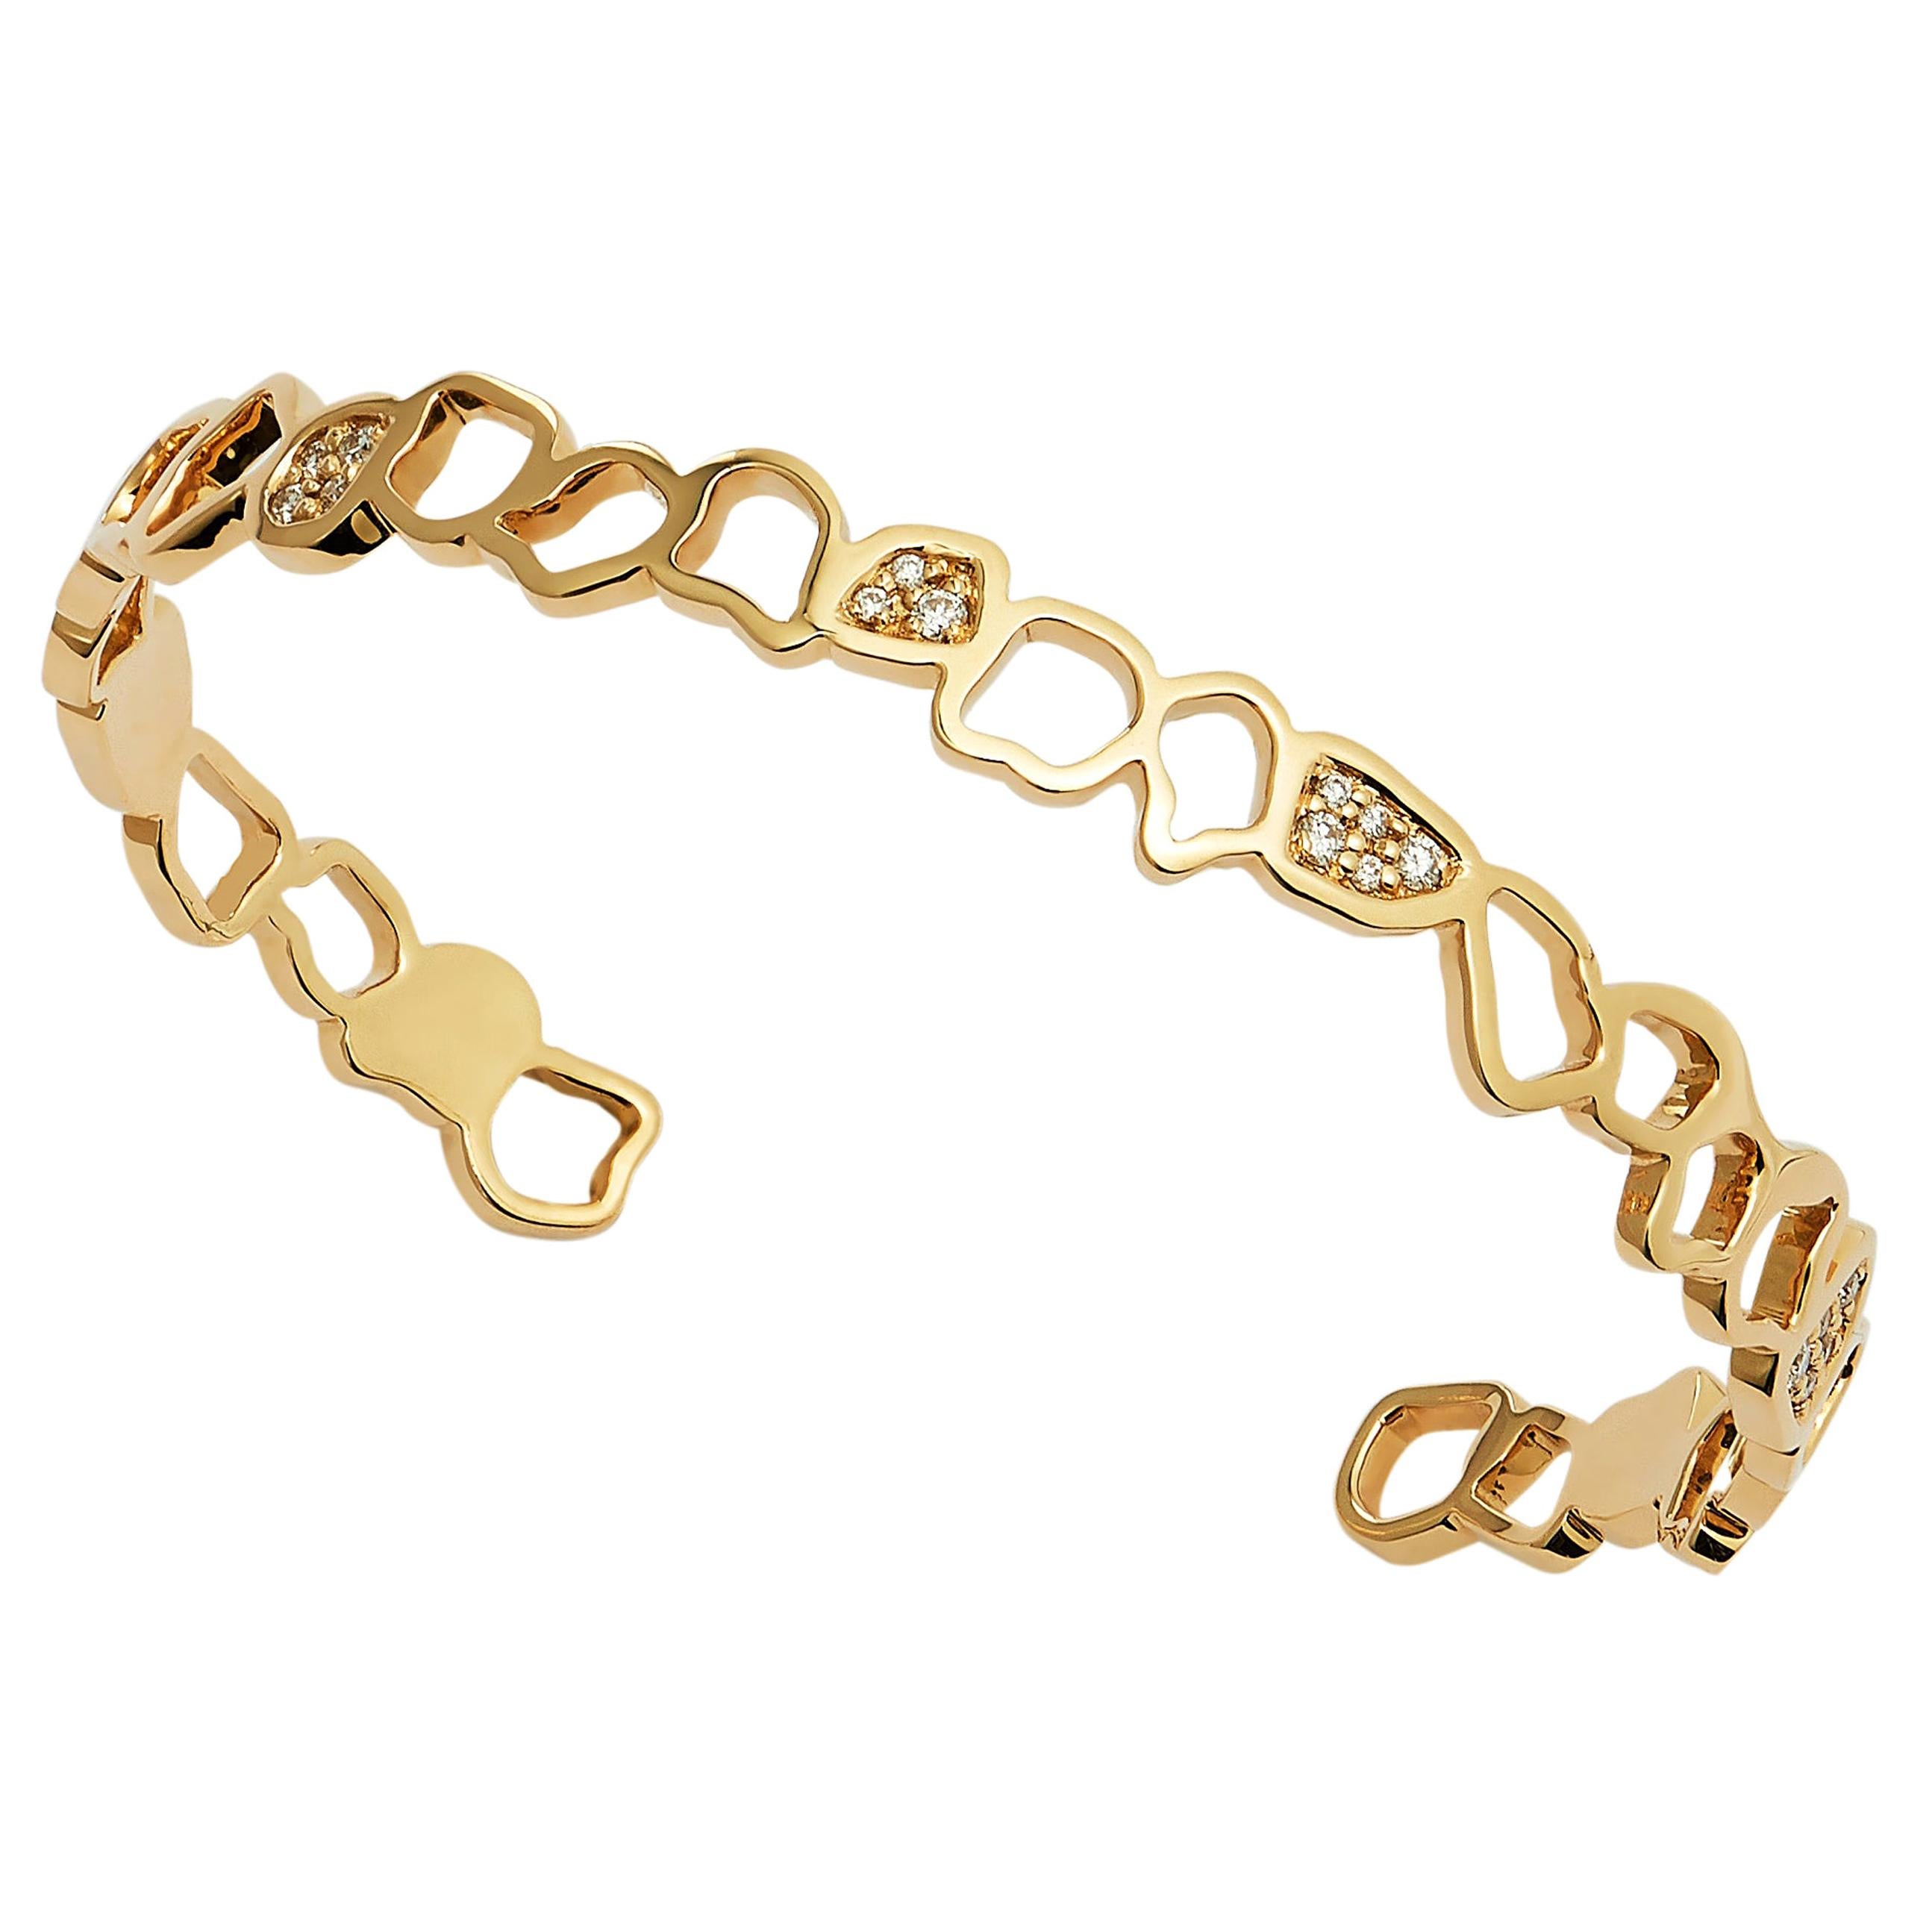 18 Karat Yellow Gold Cuff Bracelet With Diamonds For Sale